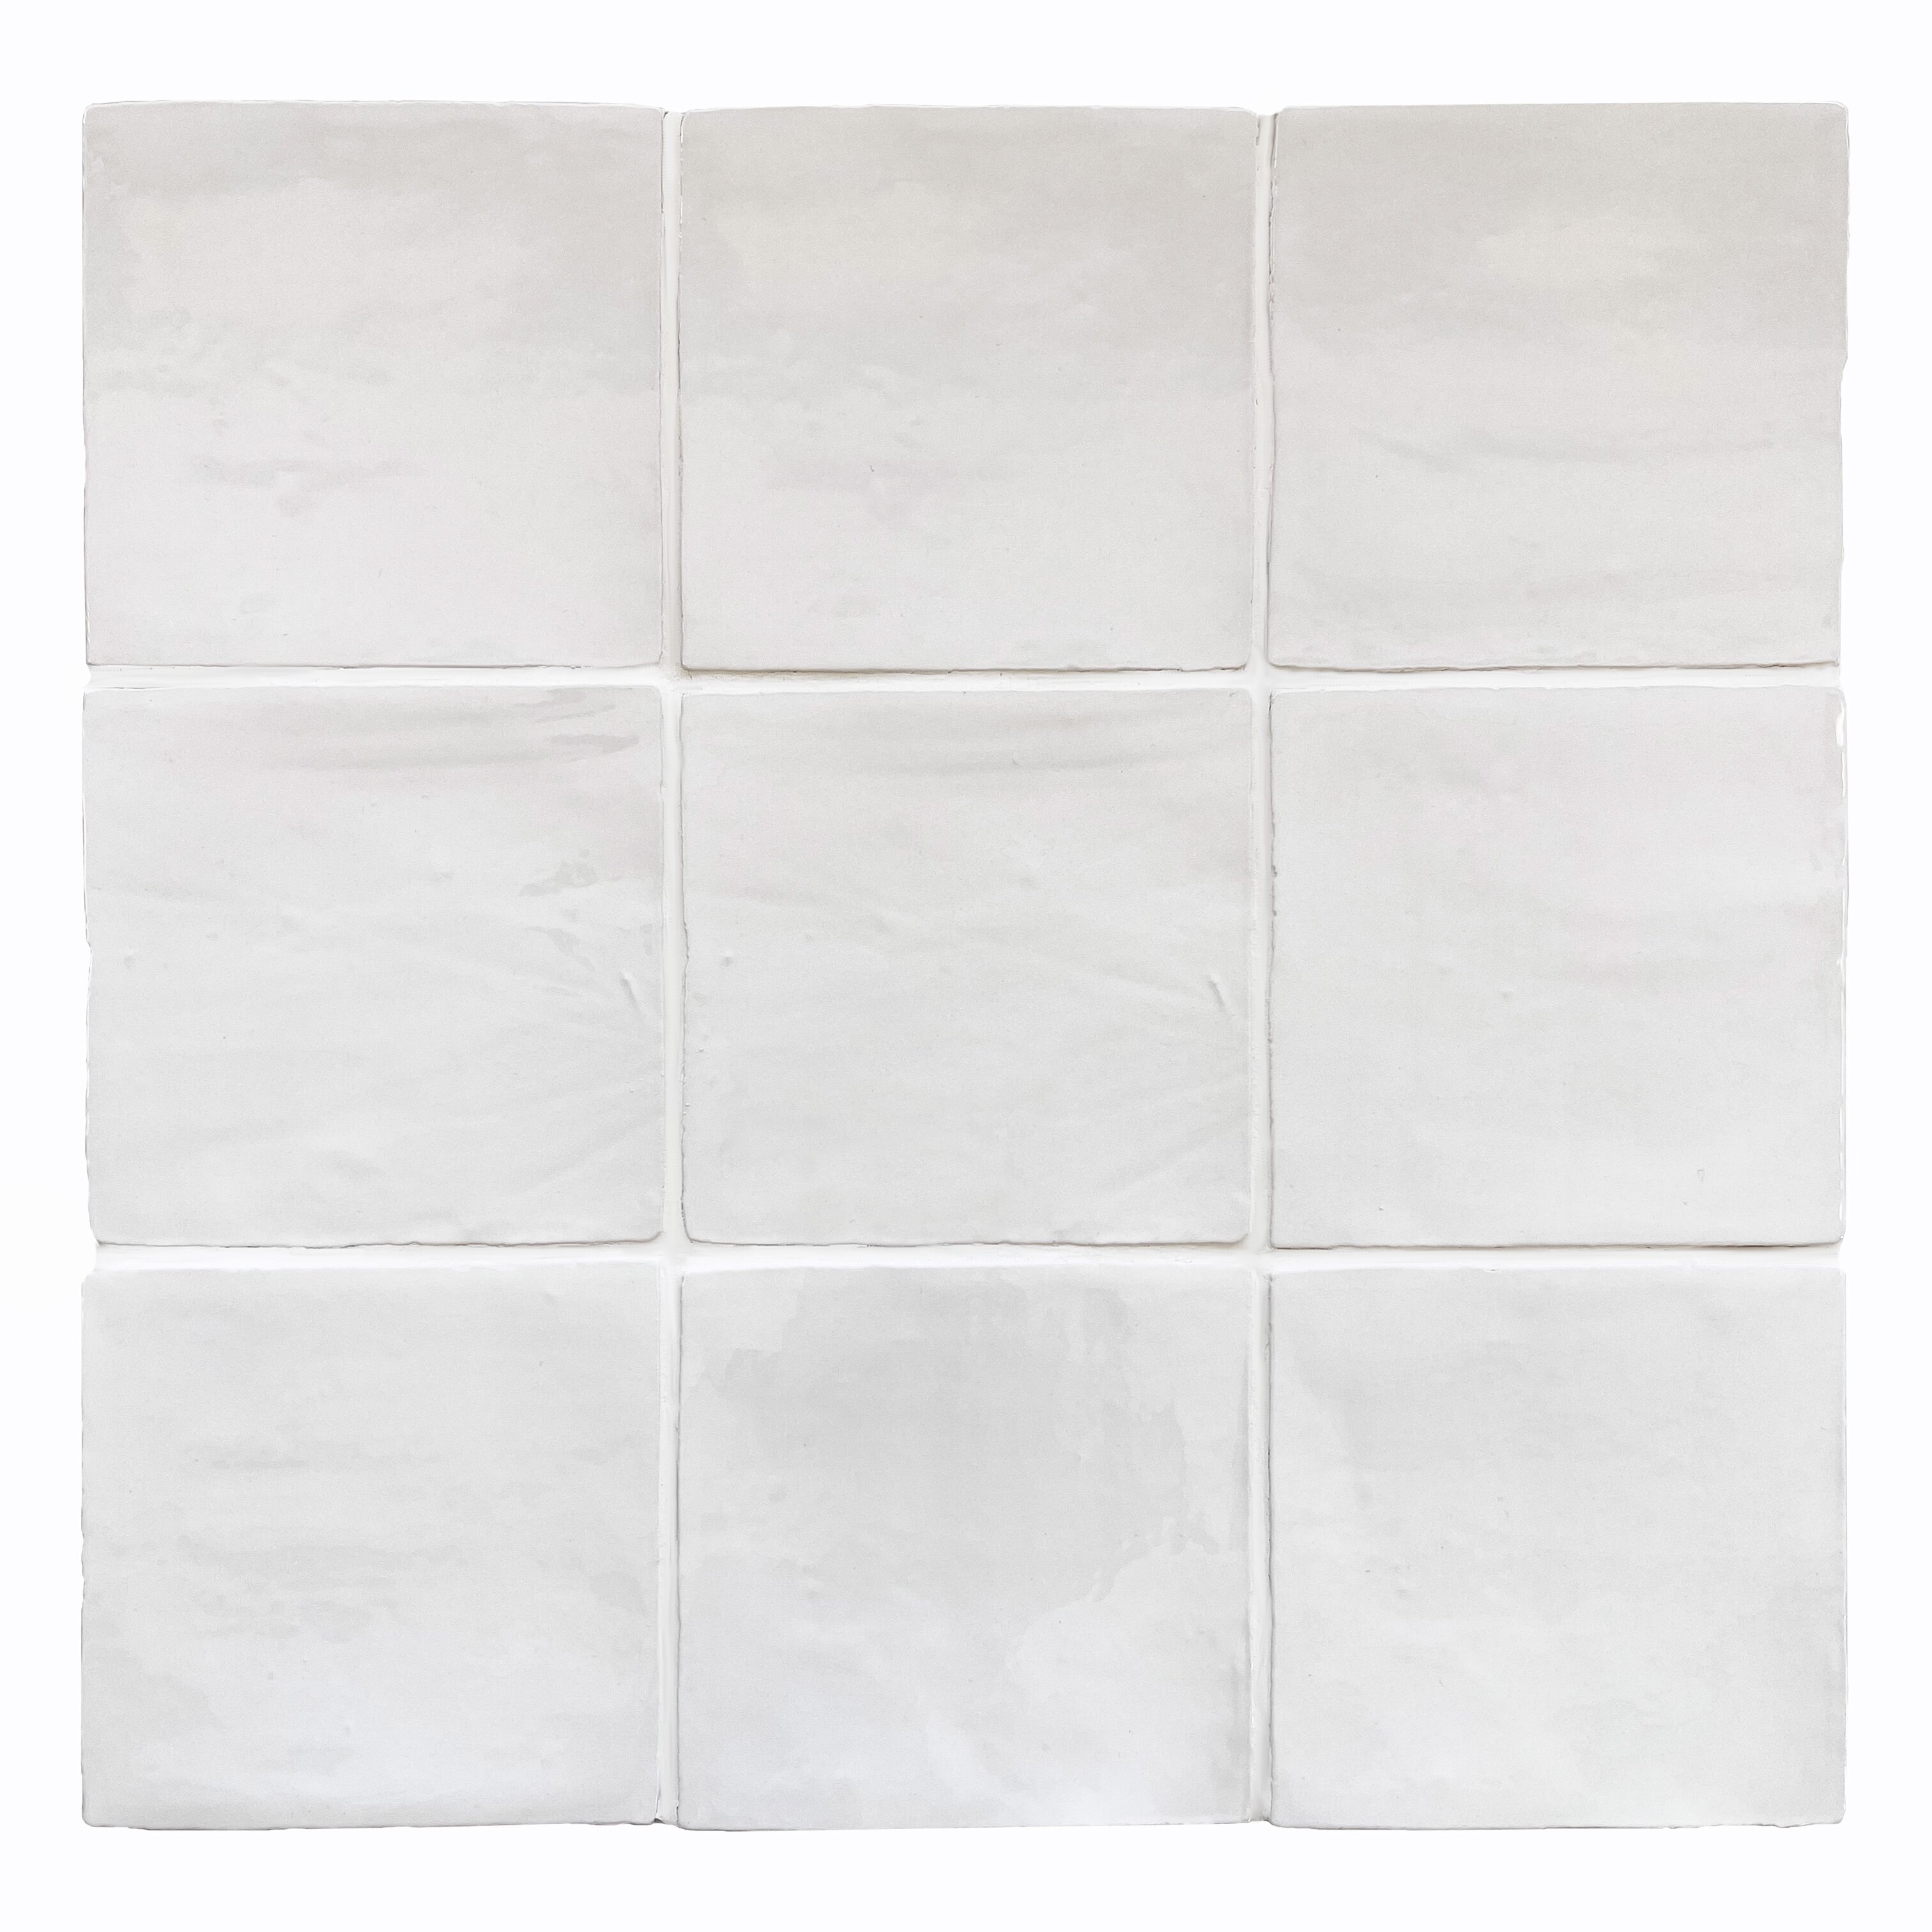 Super White Seamless Background Paper (107 W x 36' L) - SA 1-Config